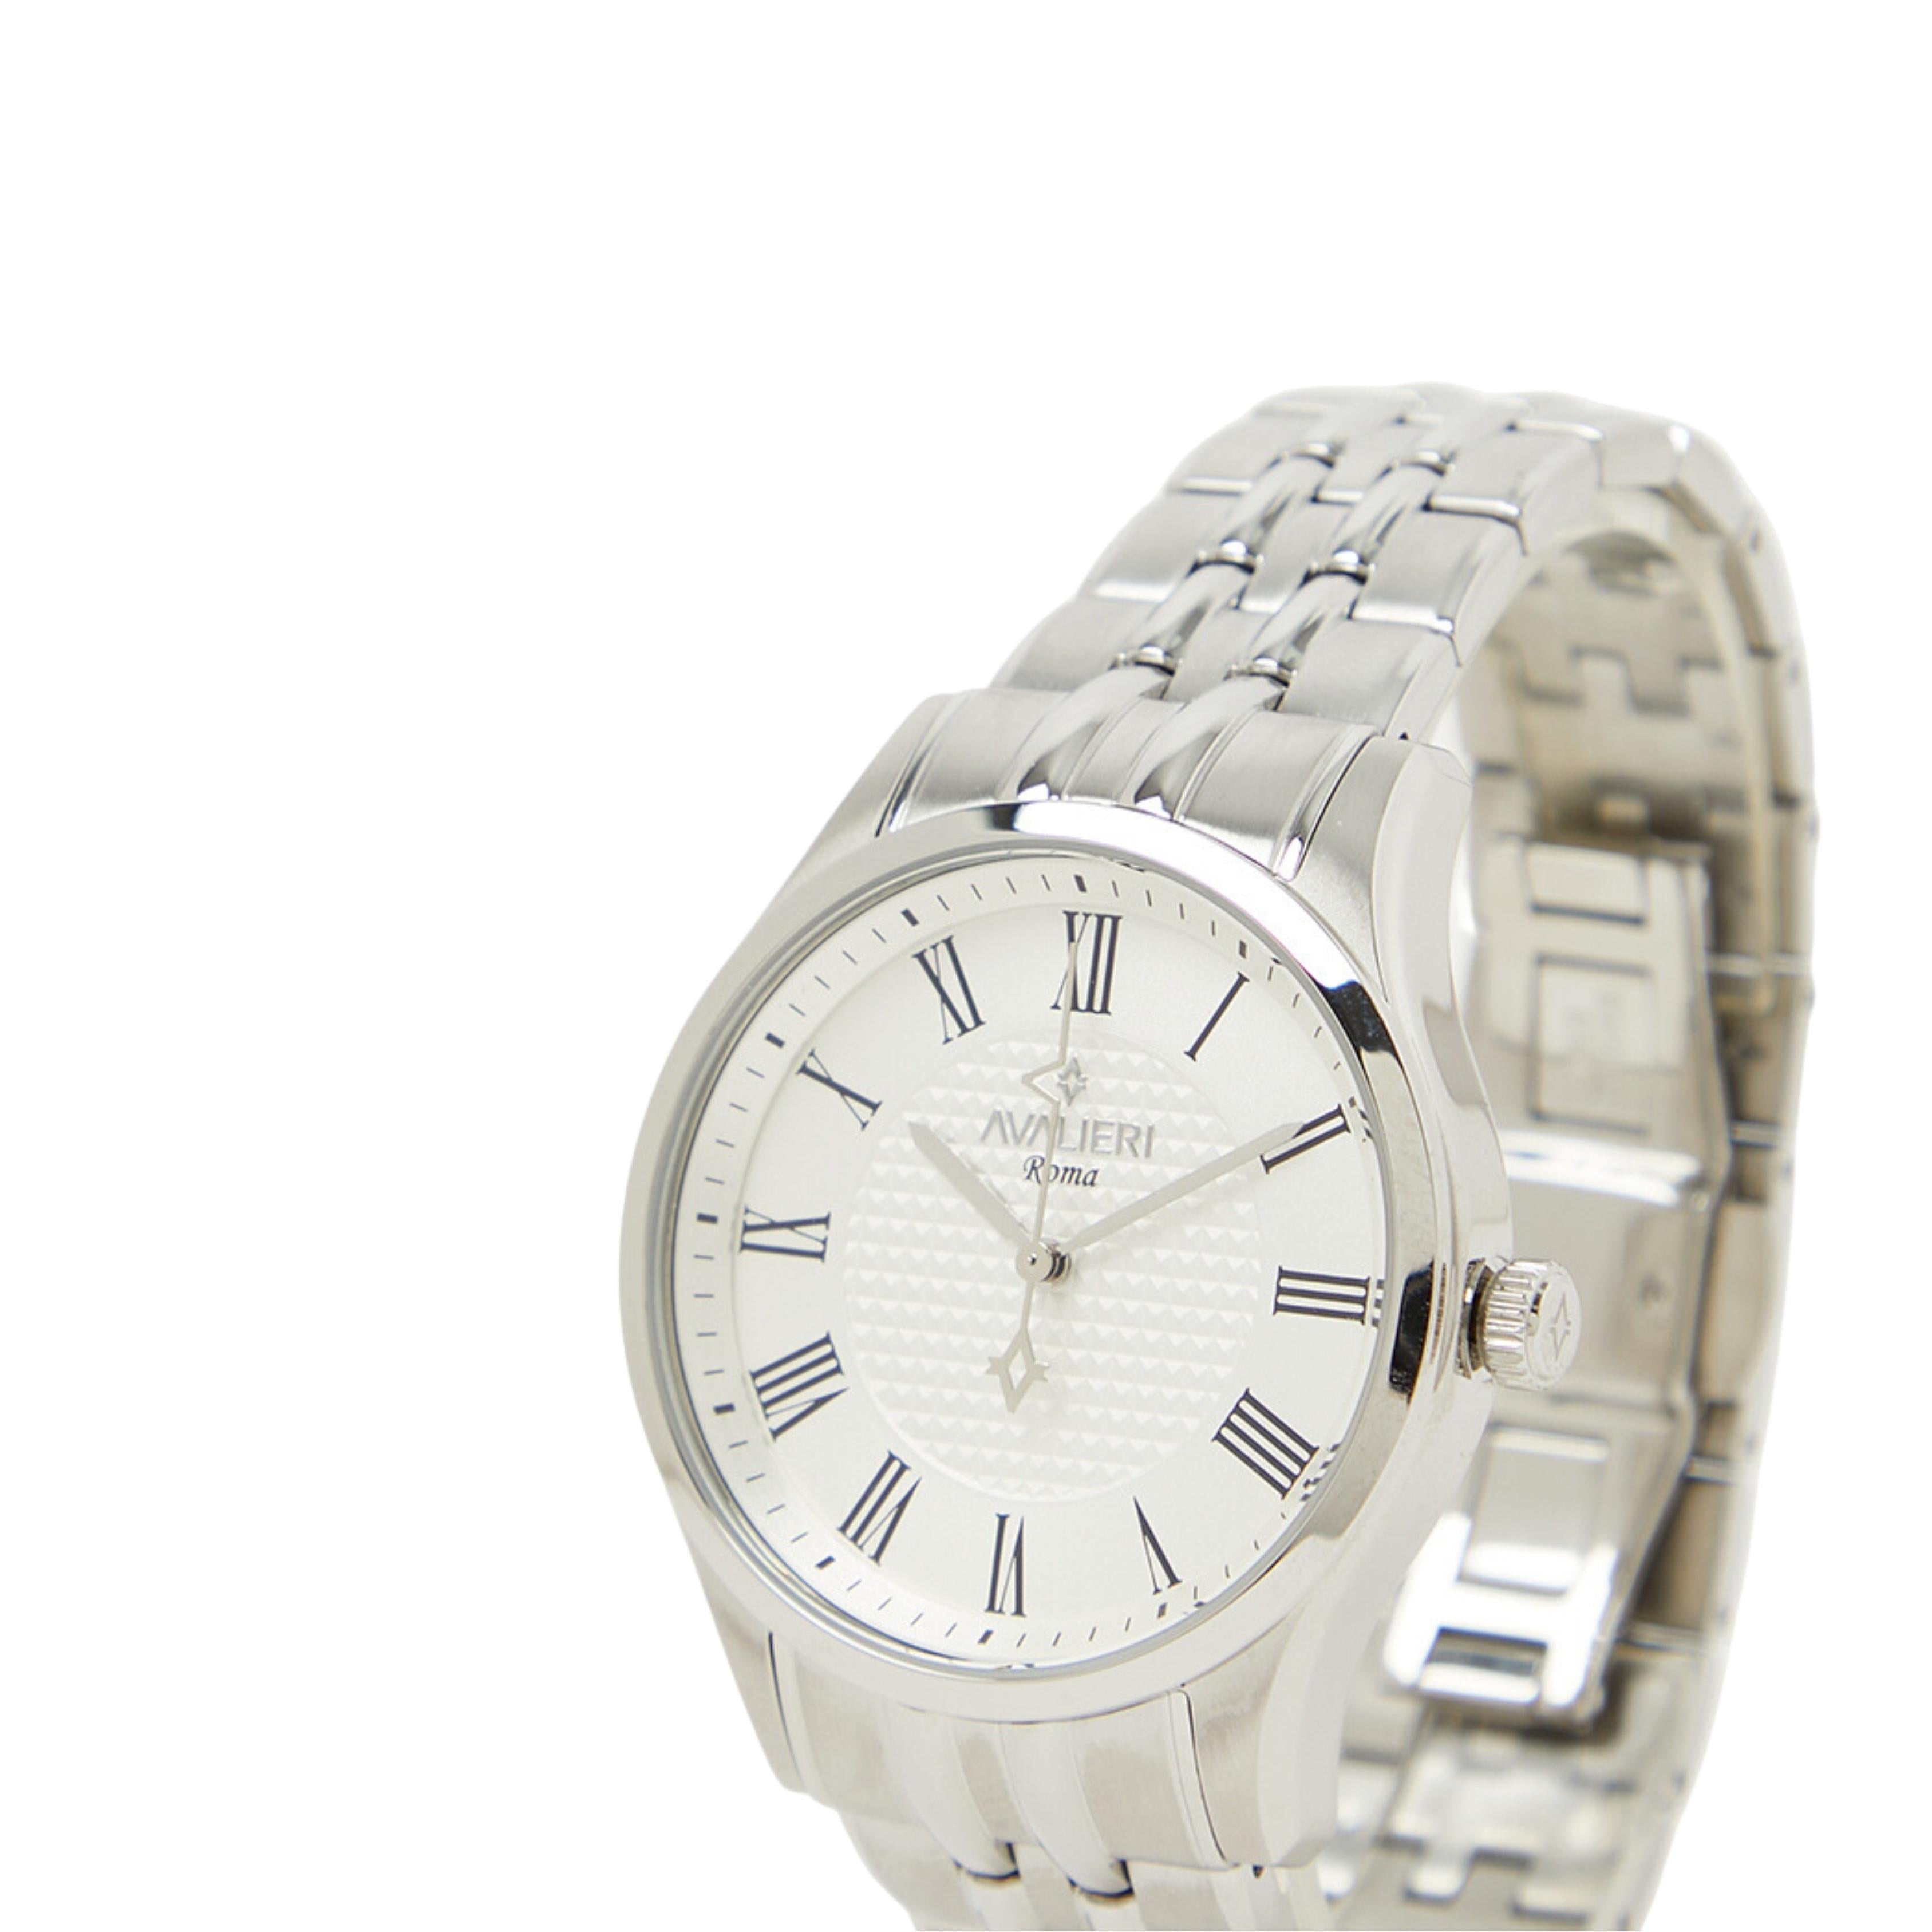 Avalieri Men's Quartz Watch With Silver White Dial - AV-2617B